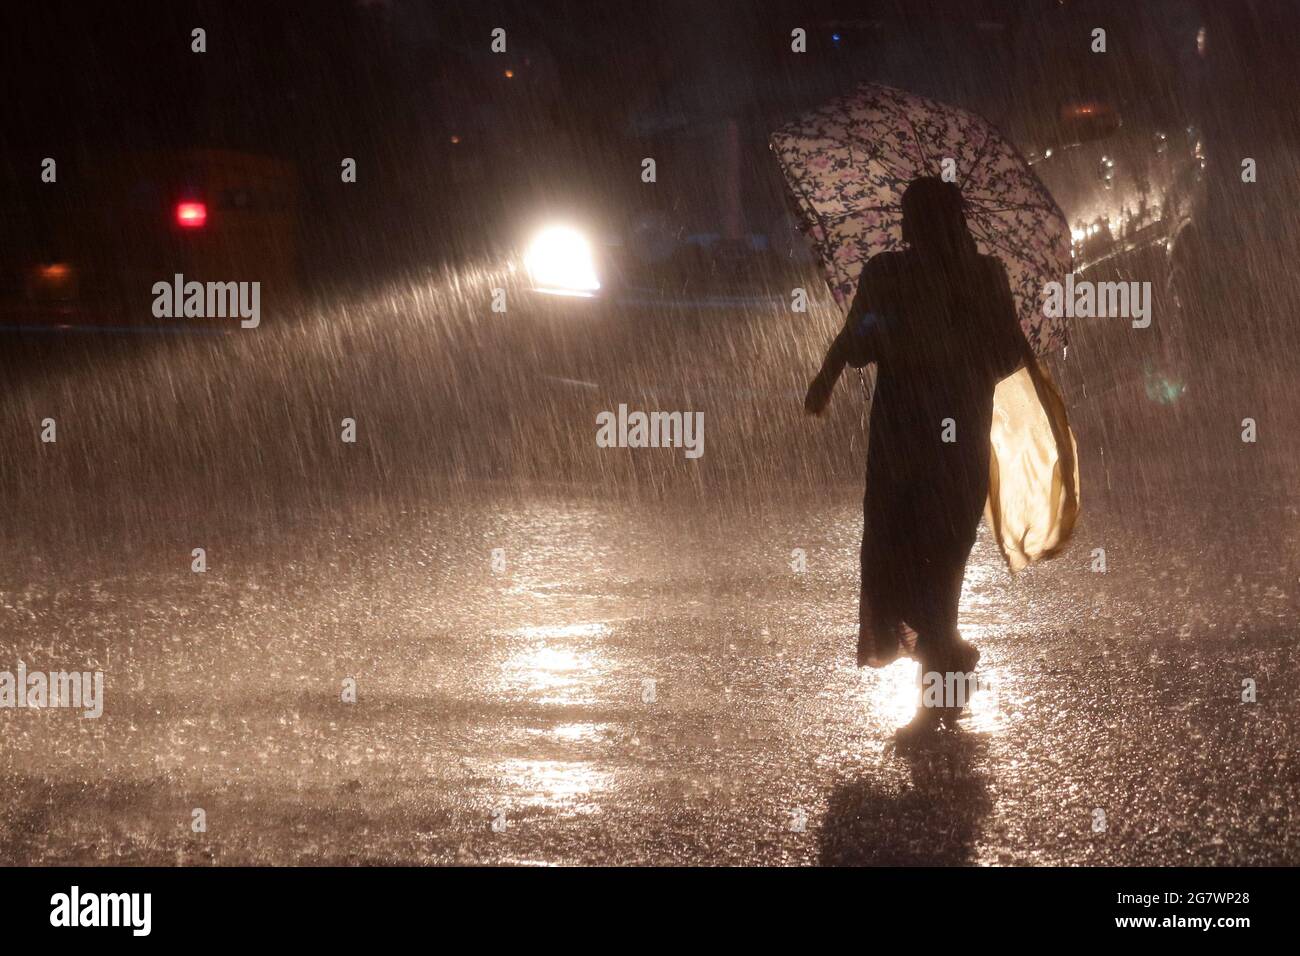 Chennai, Tamil Nadu, India. 16th July, 2021. During a heavy rainstorm, a woman takes shelter under an umbrella while walking down a street in Chennai. Credit: Sri Loganathan/ZUMA Wire/Alamy Live News Stock Photo